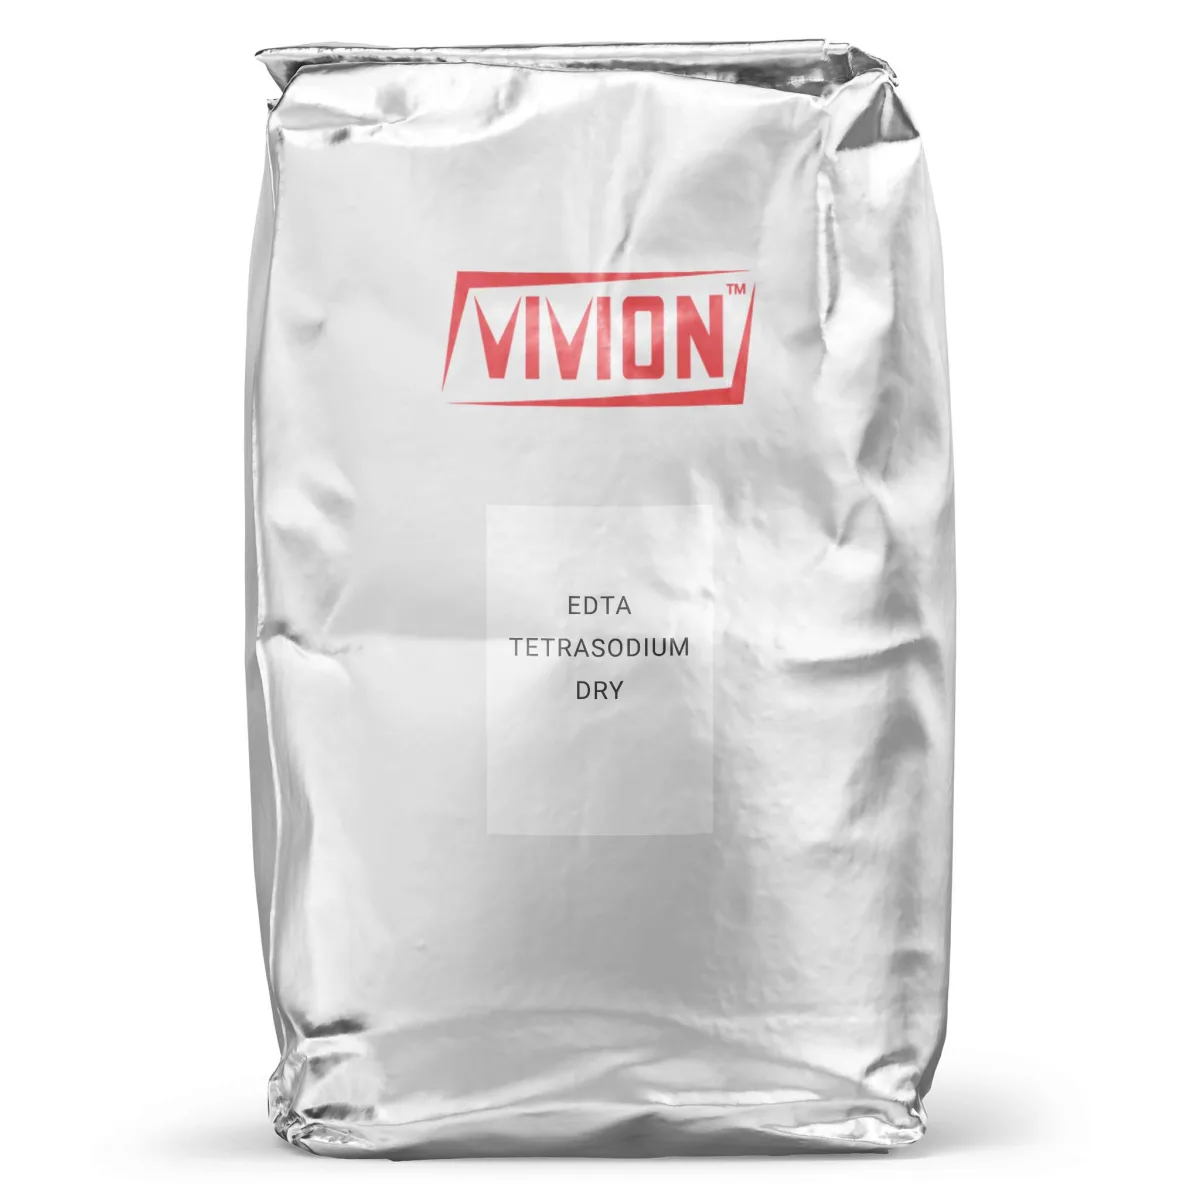 Bag of Vivion's wholesale EDTA Tetrasodium Dry.